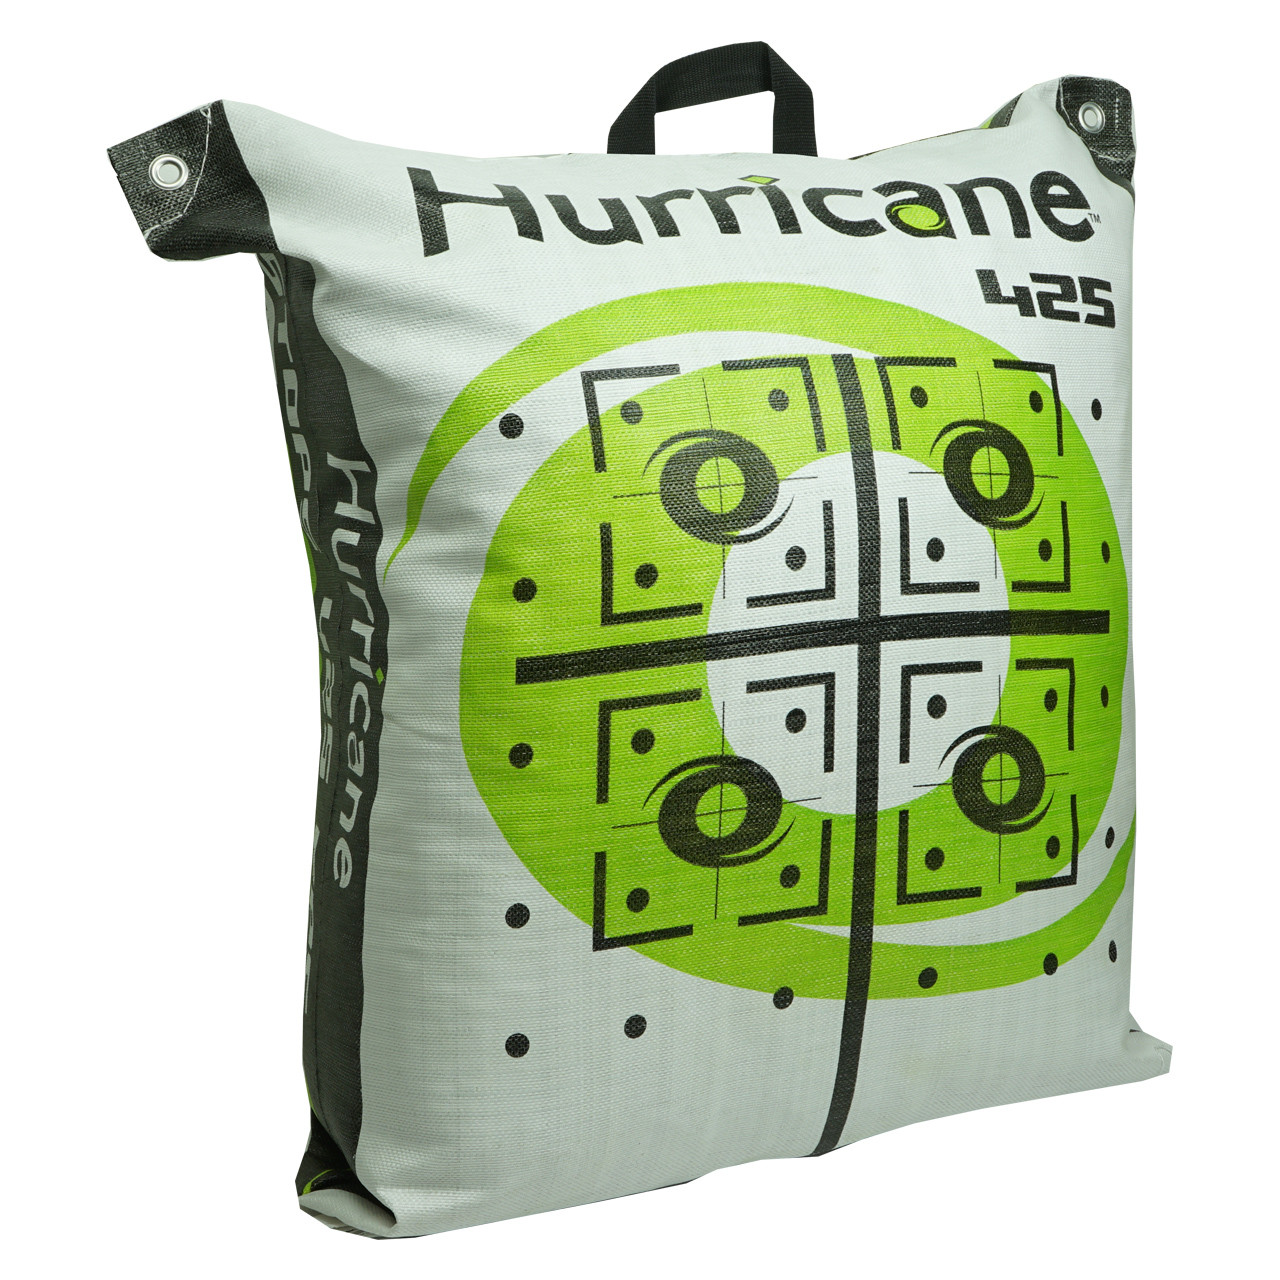 Hurricane H-25 Bag Target, 25" x 12" x 23"